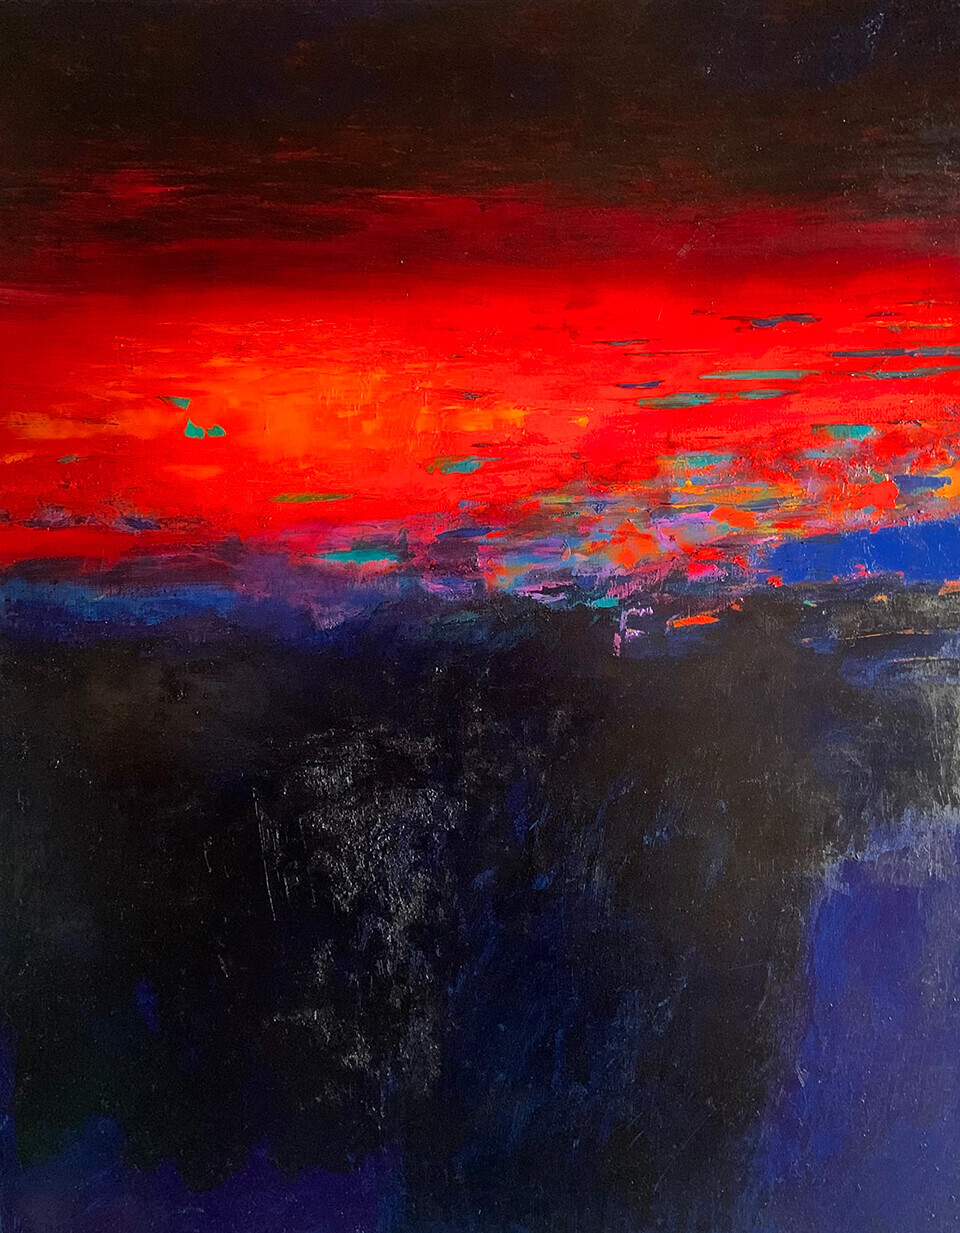 Martyn Brewster 'Seascape Series' 1 oil on canvas 104cm x 84cm box framed